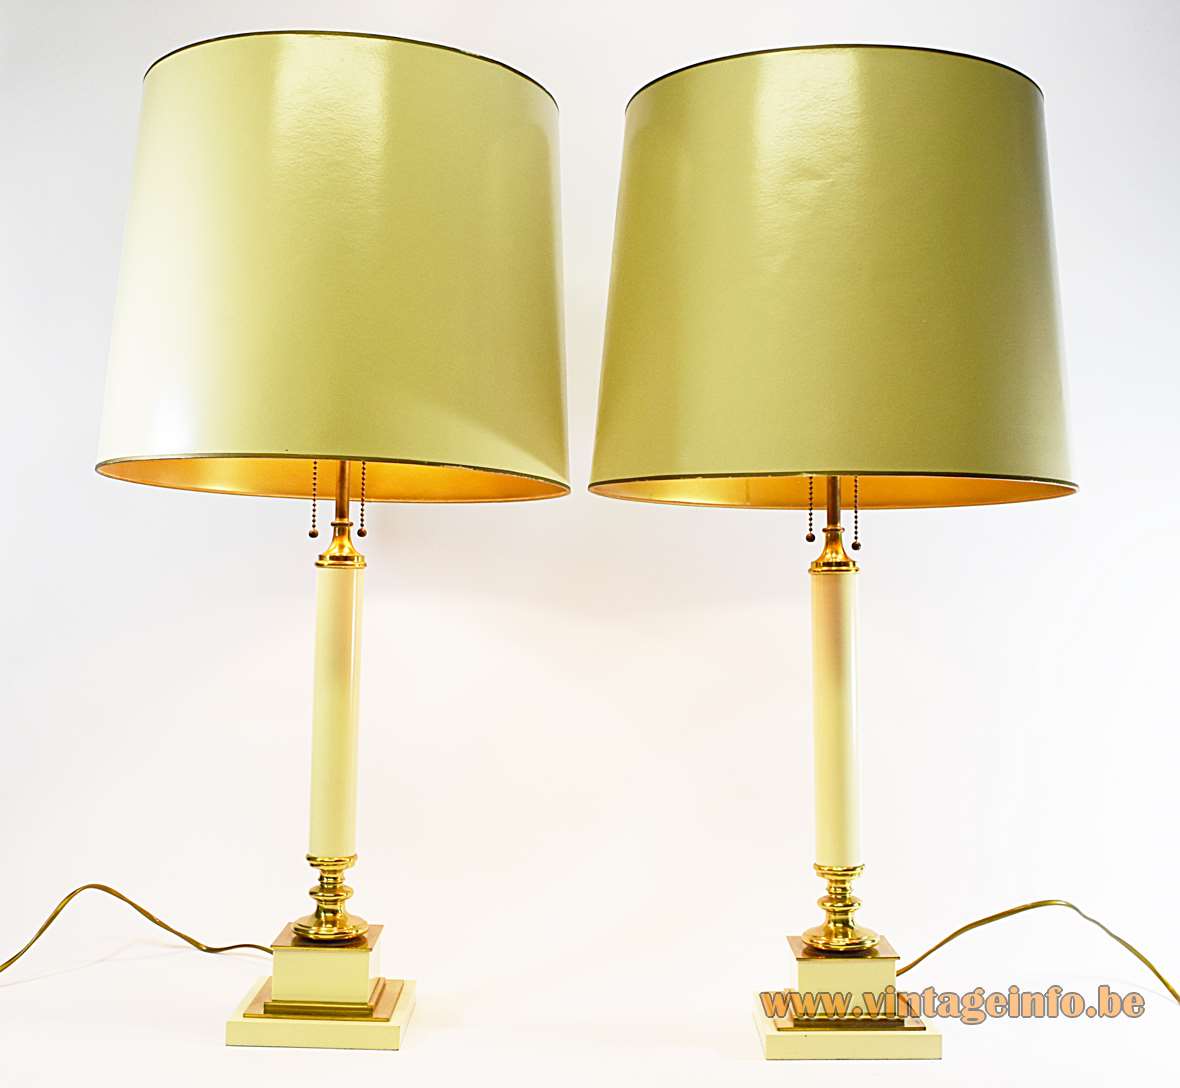 Neoclassical table lamps square vanilla cream base brass parts cardboard lampshades 1970s 1980s Deknudt Lighting Belgium